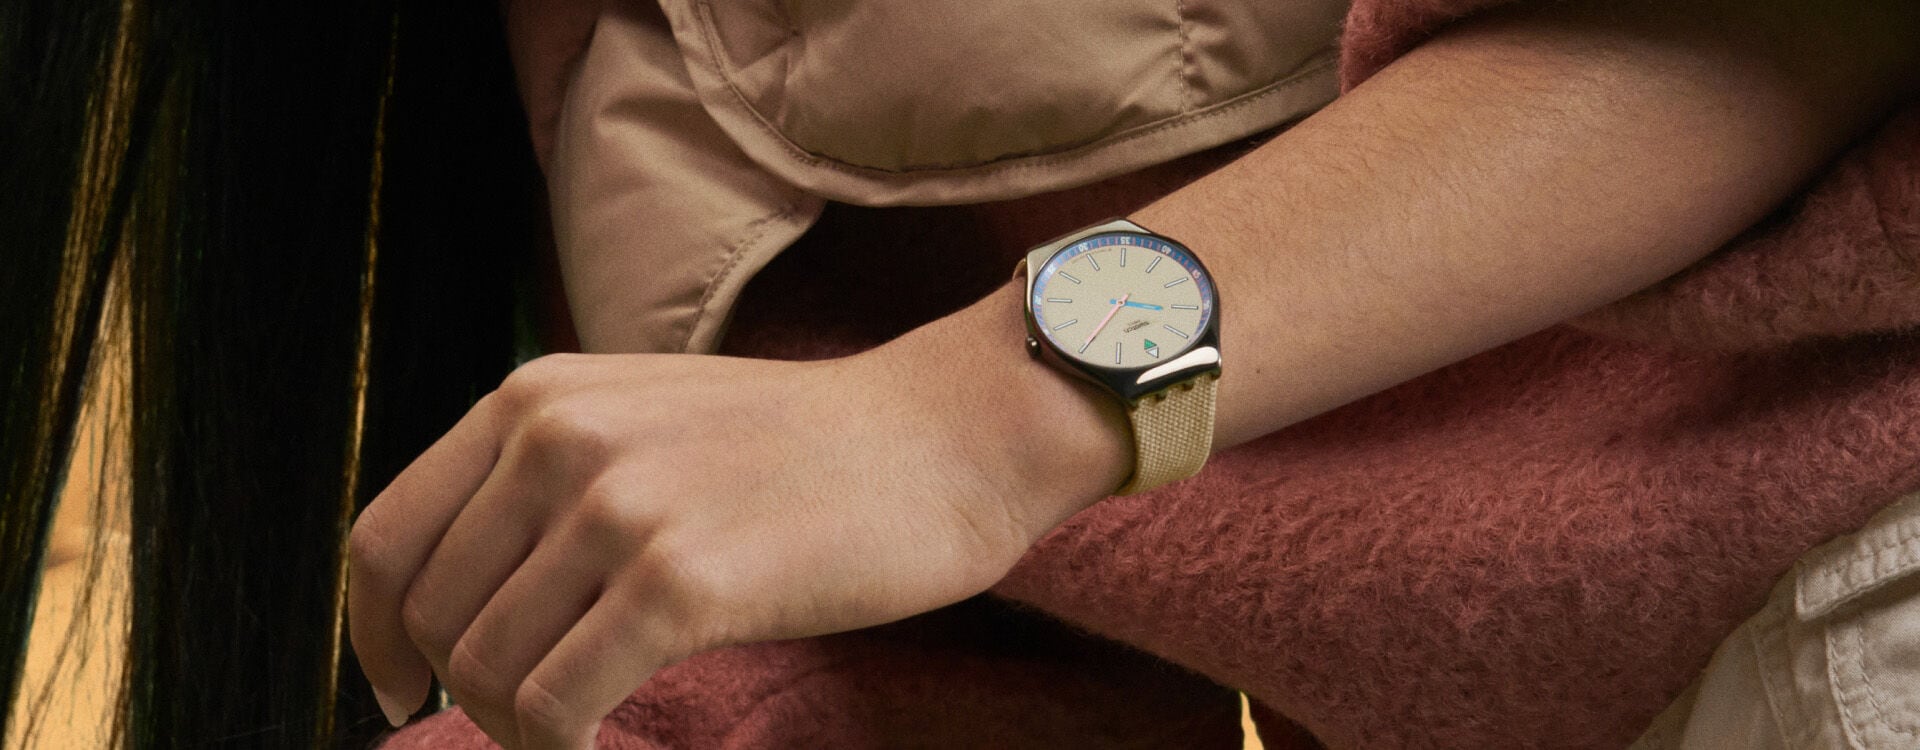 Reloj Swatch Mujer Skin Irony Contrasted Simplicity SYXG120M